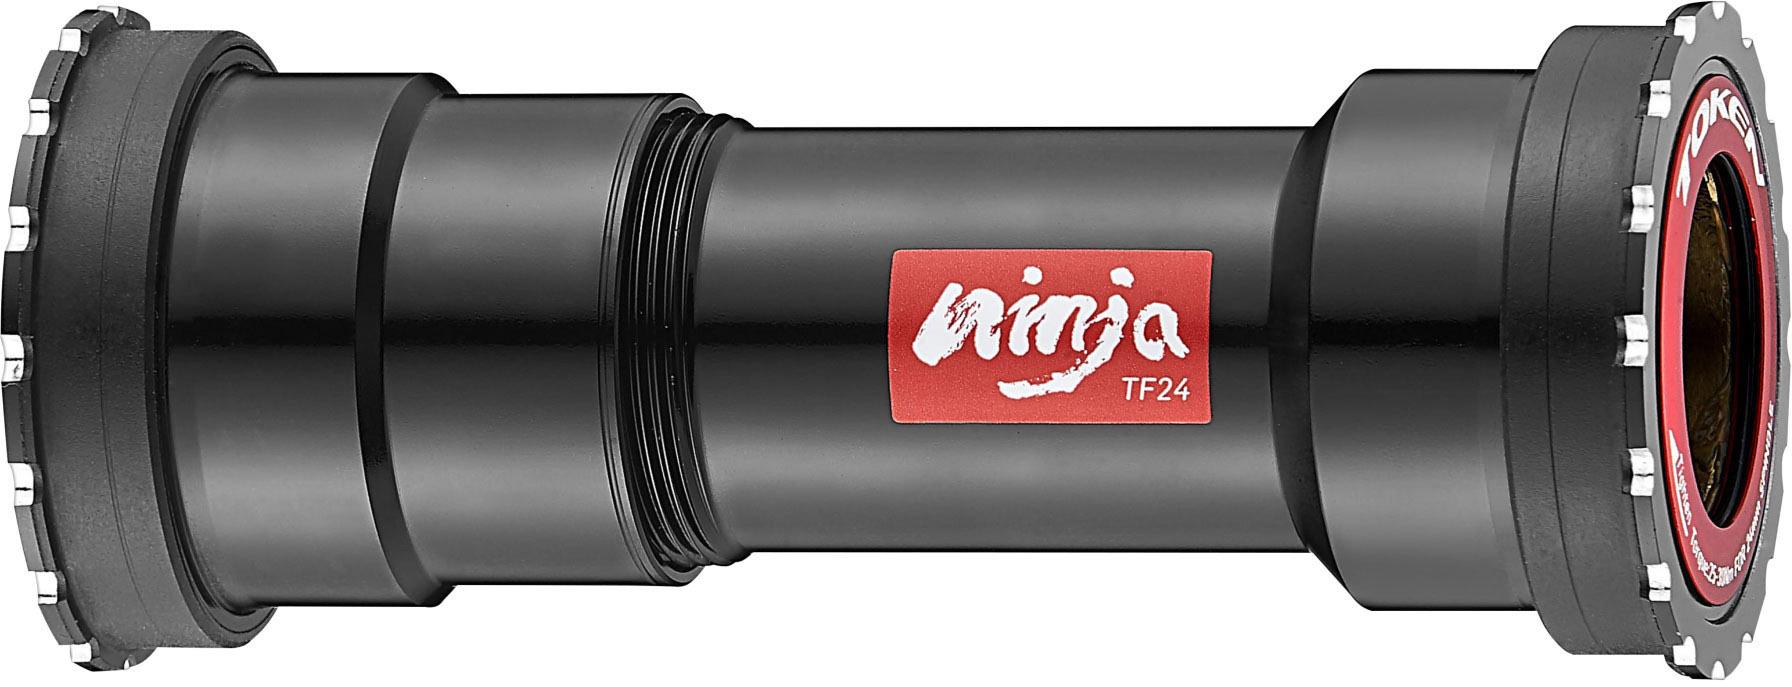 Token Ninja Bb86/89.5/92 Shimano 24mm Tbt Bottom Bracket - Black